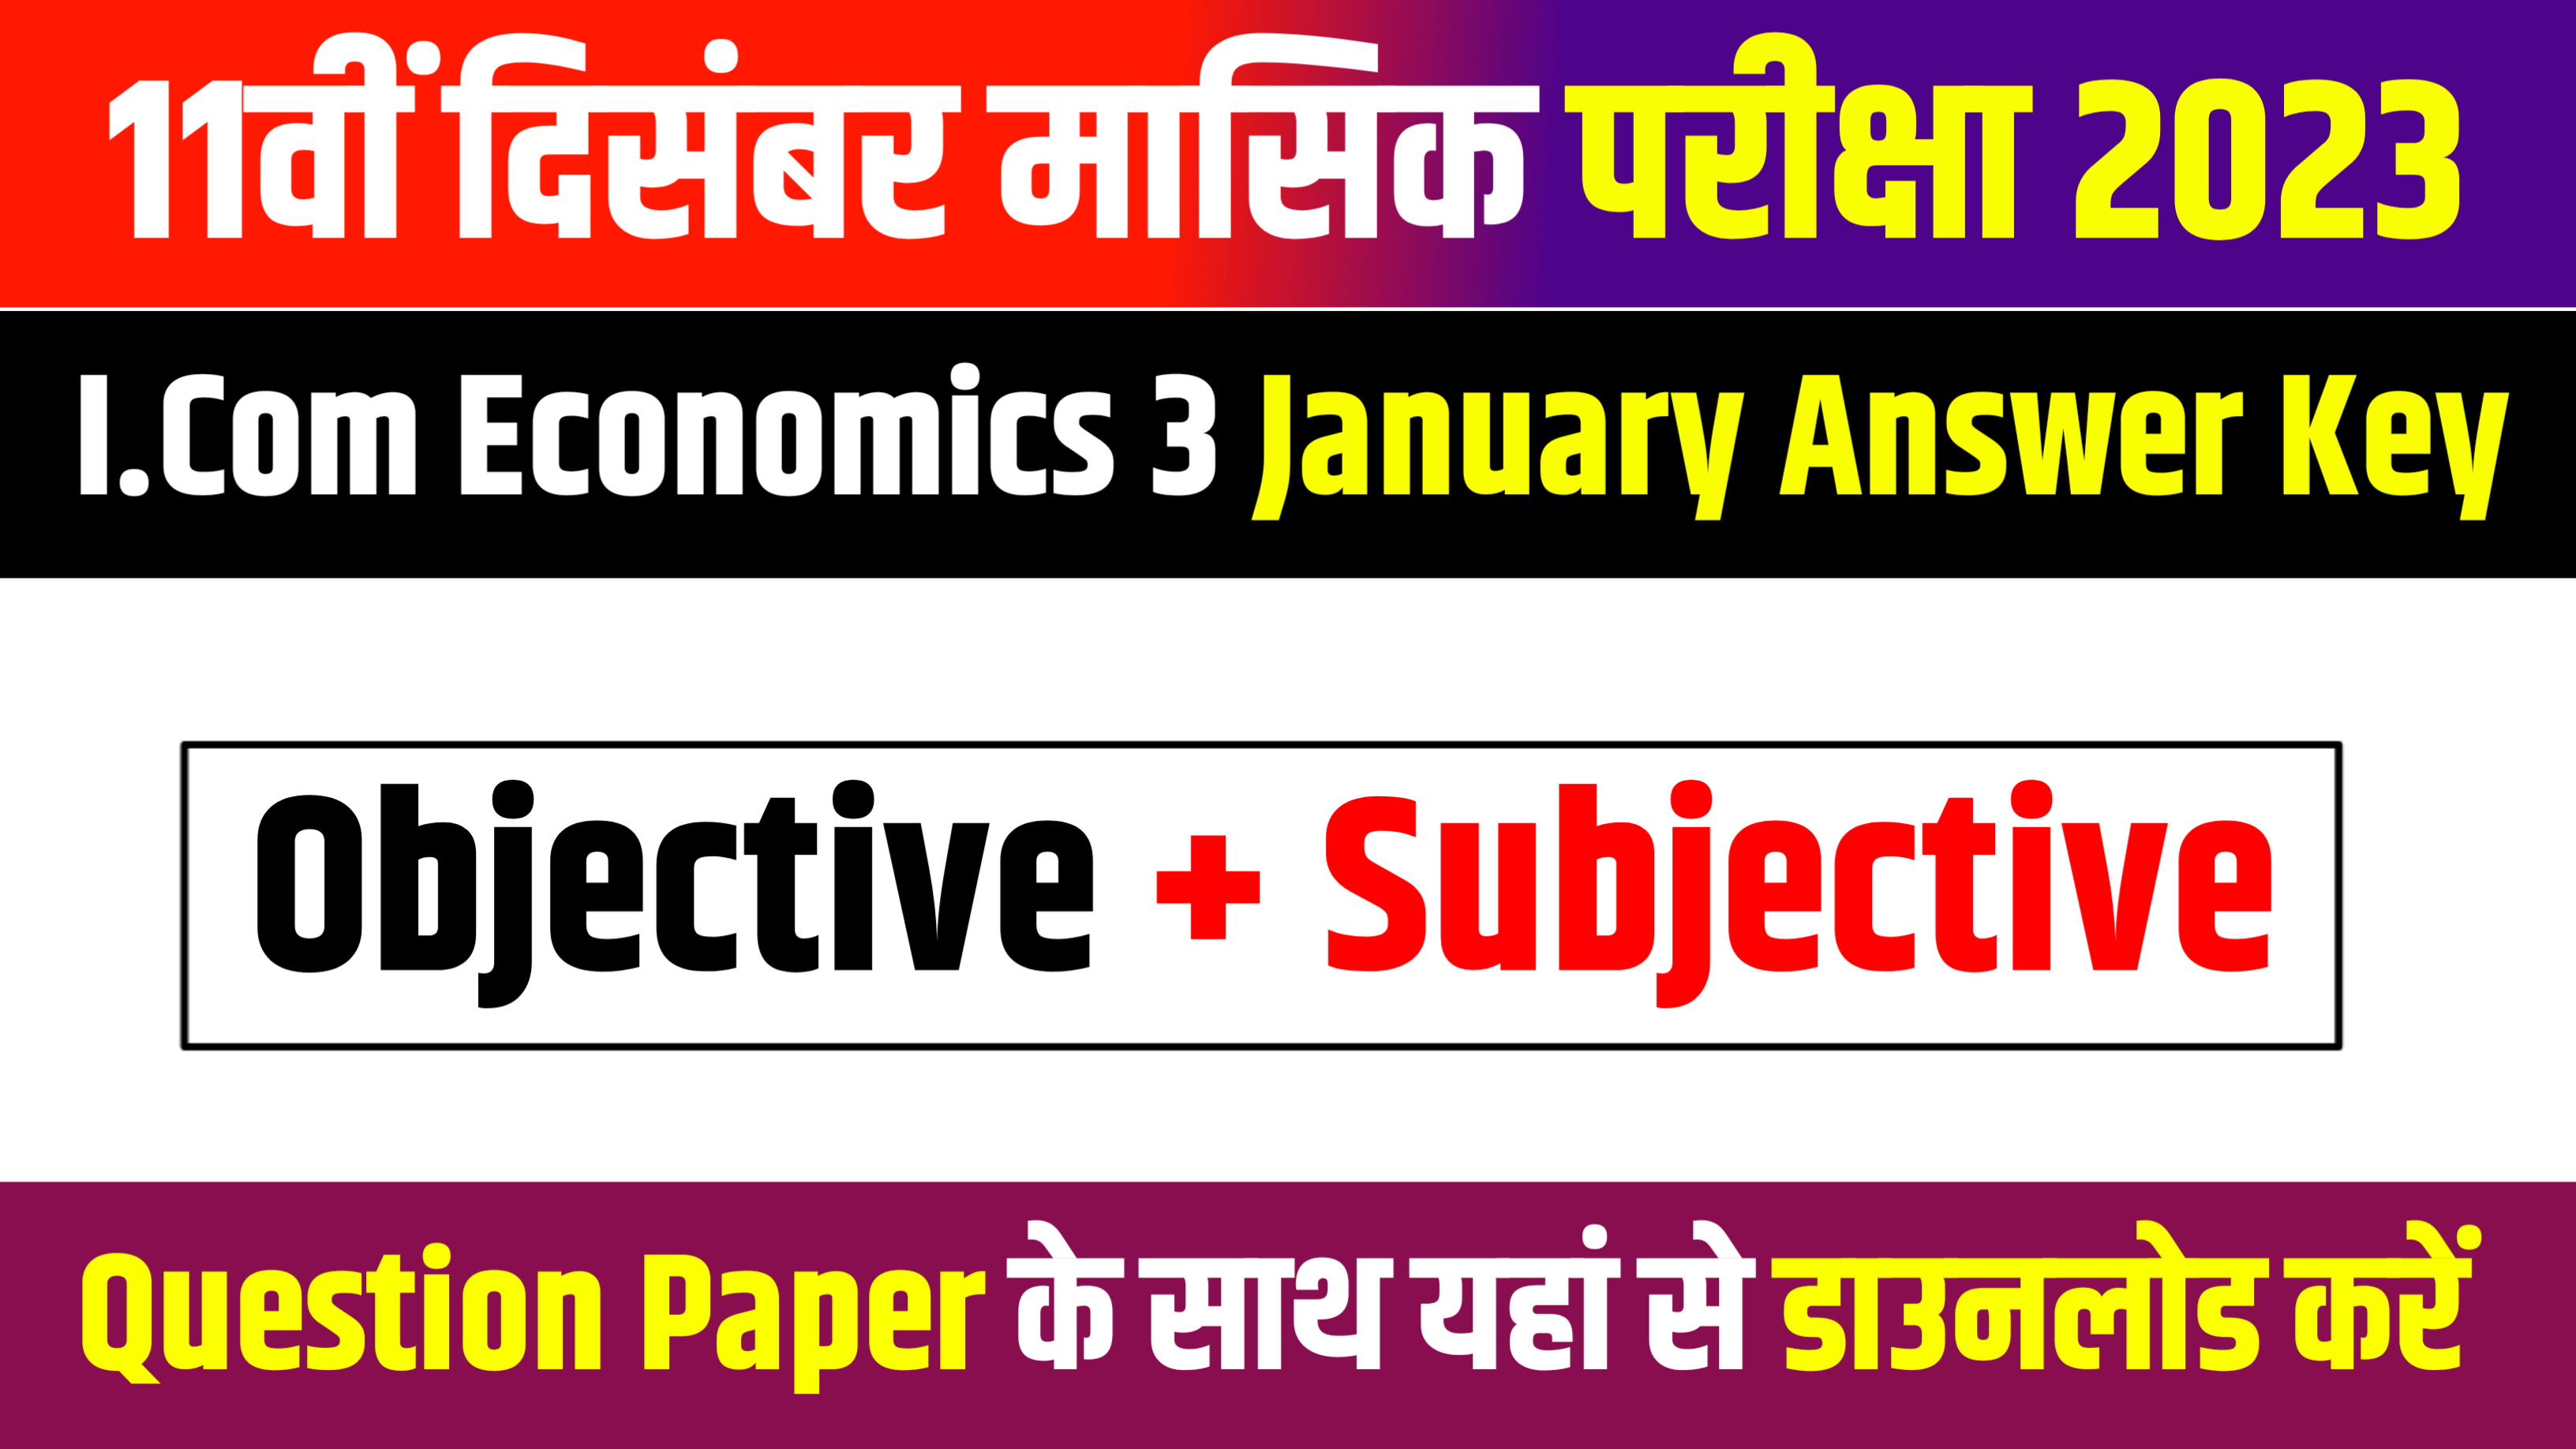 Bihar Board 11th Commerce Economics Answer Key: